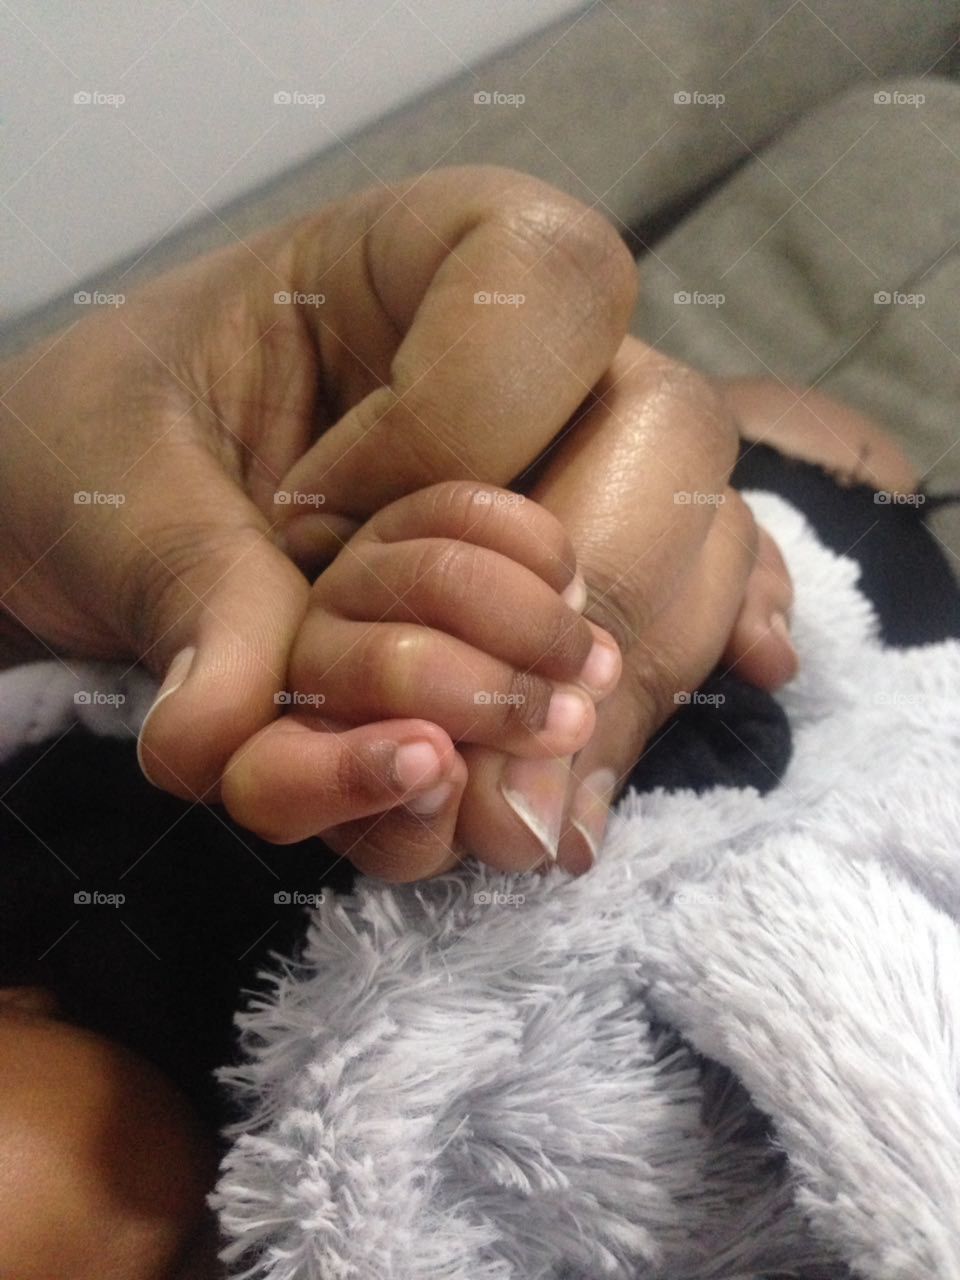 My niece's hand. 🖤